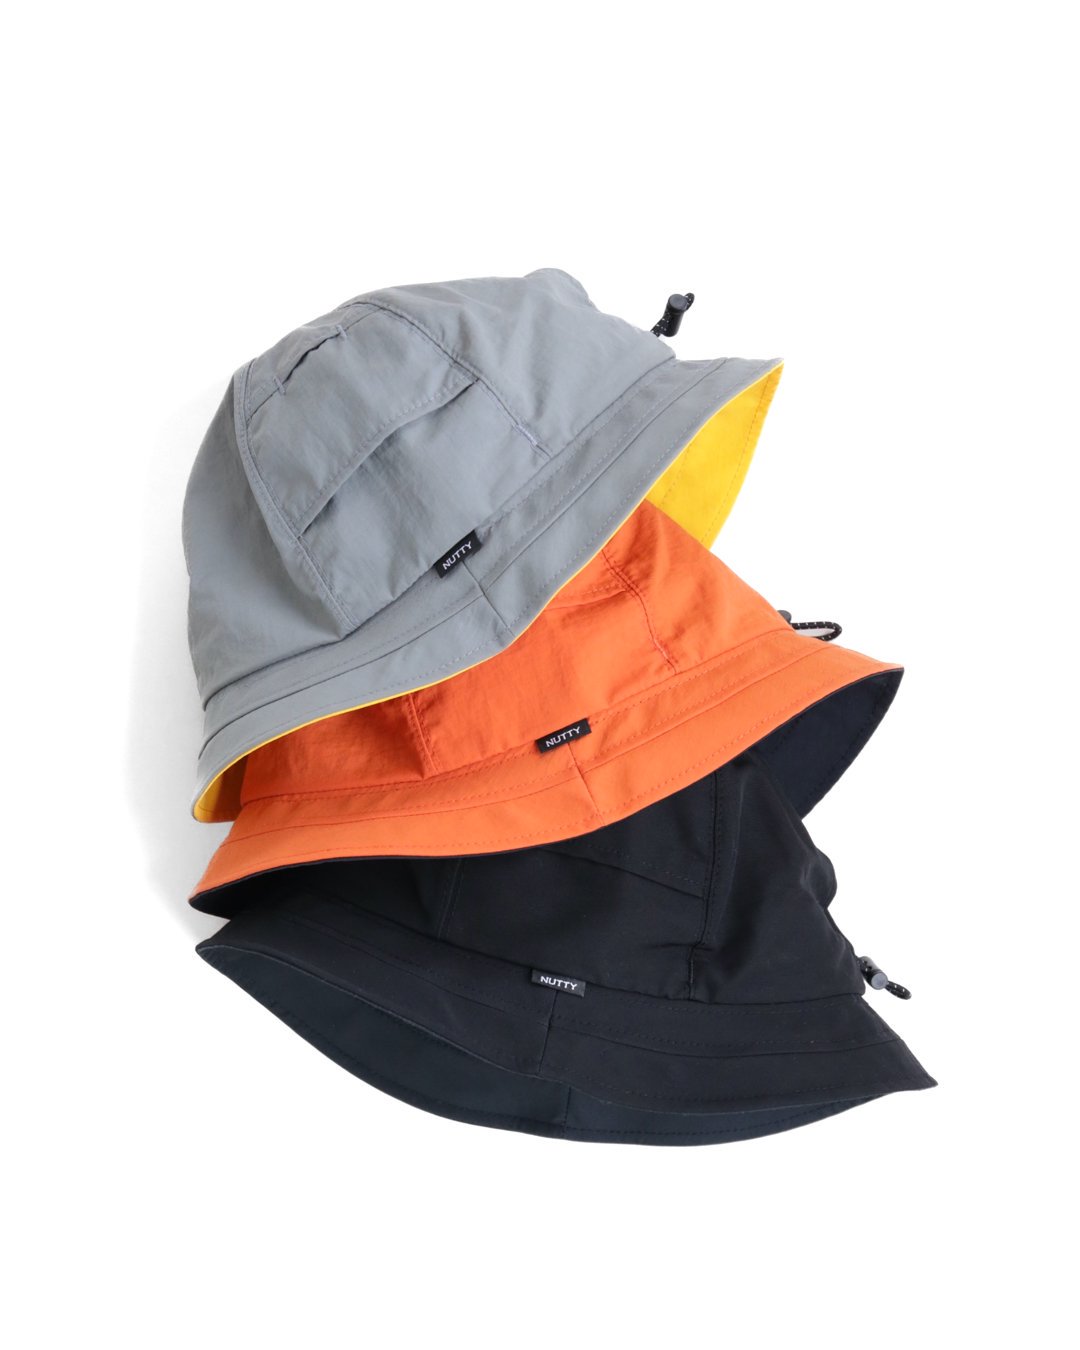 ROAM HAT - Light Gray, Orange, Black